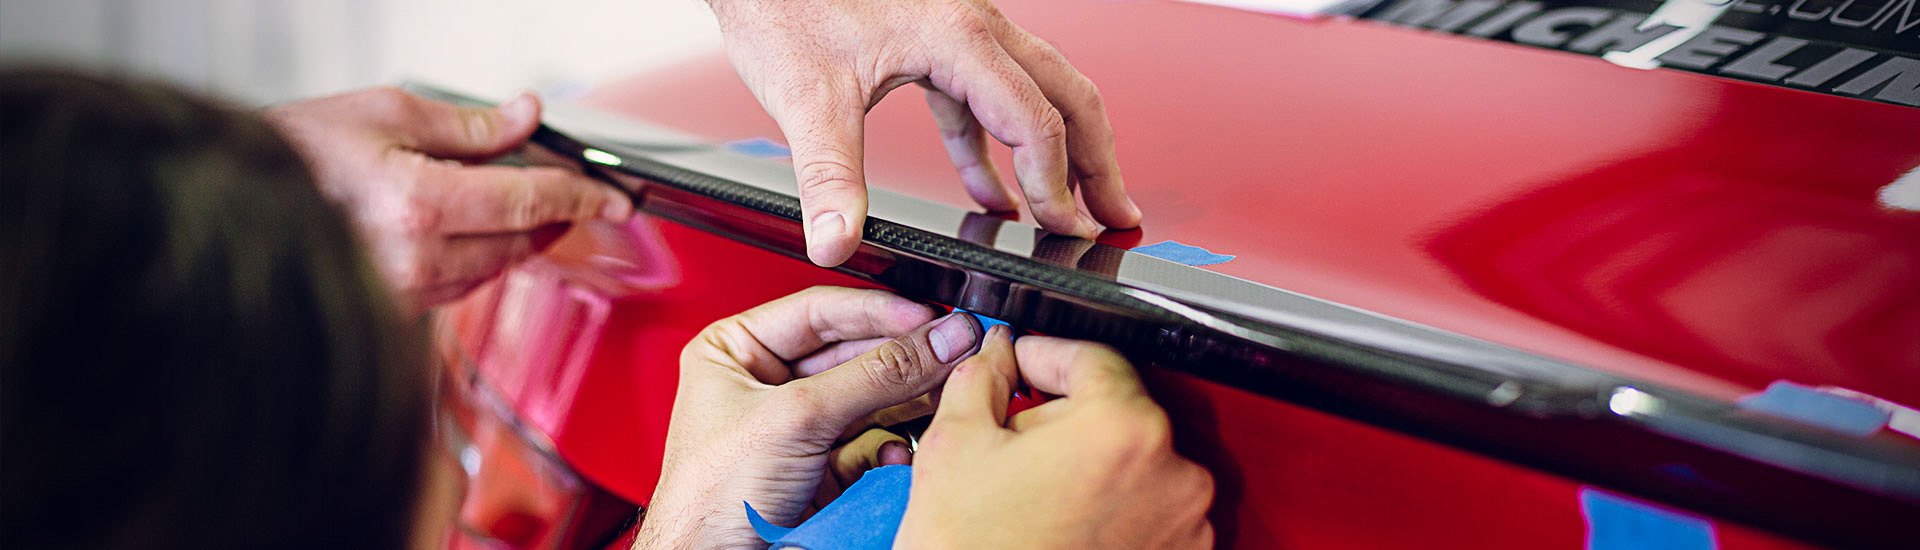 How to Install Car Rear Trunk LED Spoiler Kit 